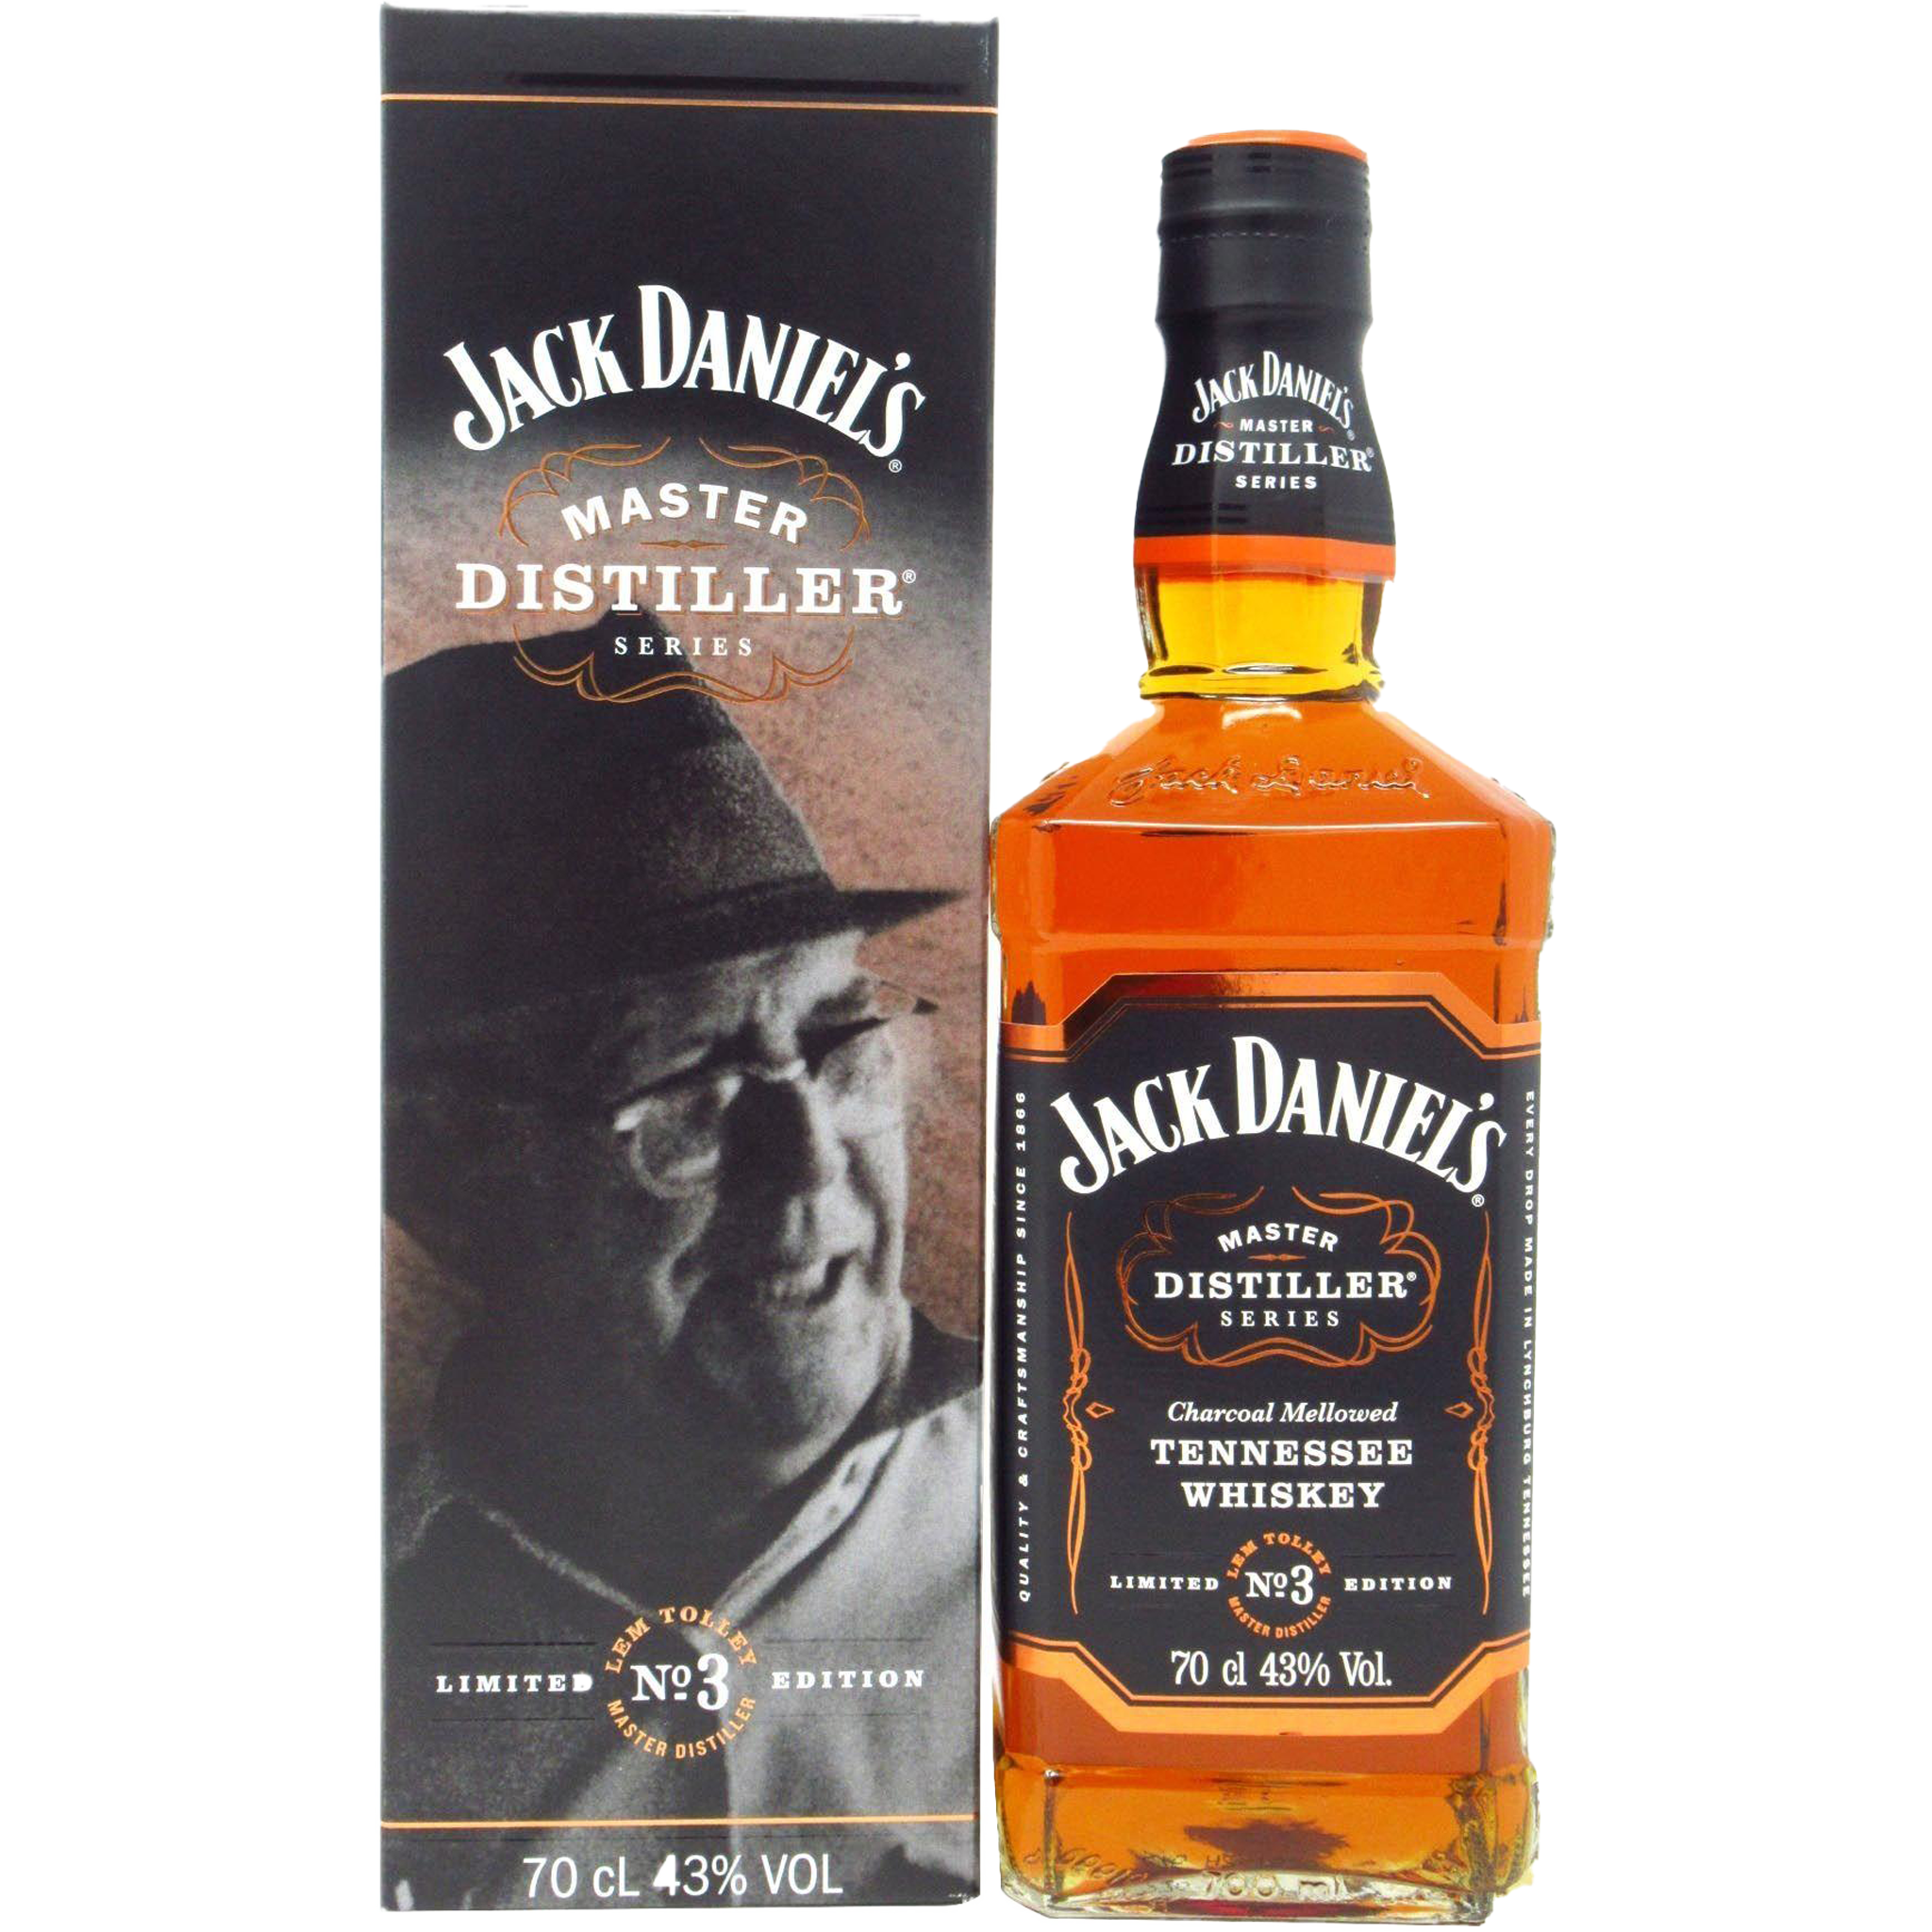 Jack Daniel's Master Distiller Limited NO3 Edition